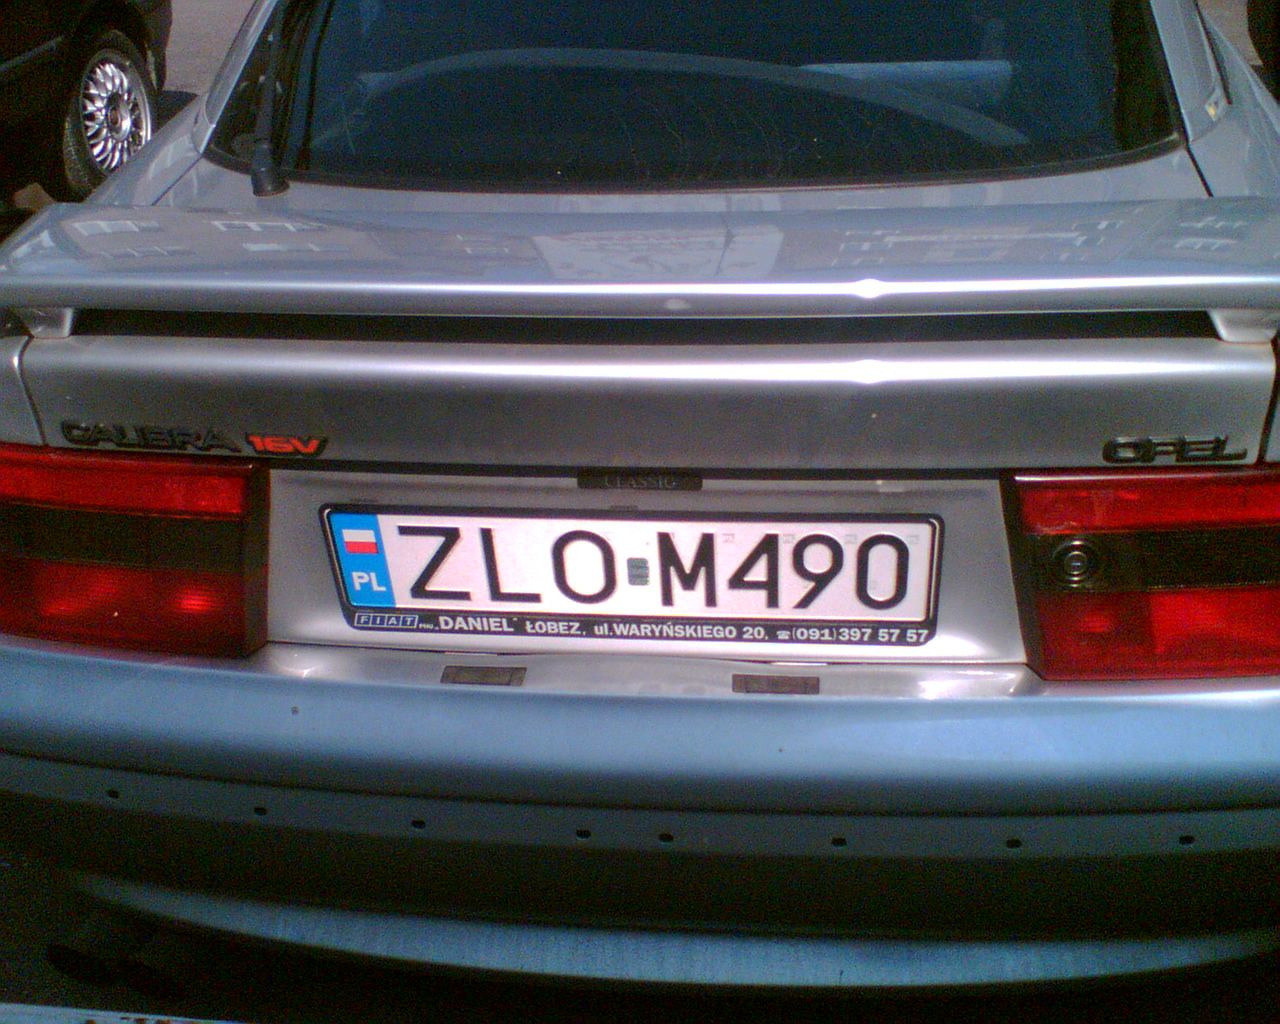 ZLO M490 (fot. widelec.org)